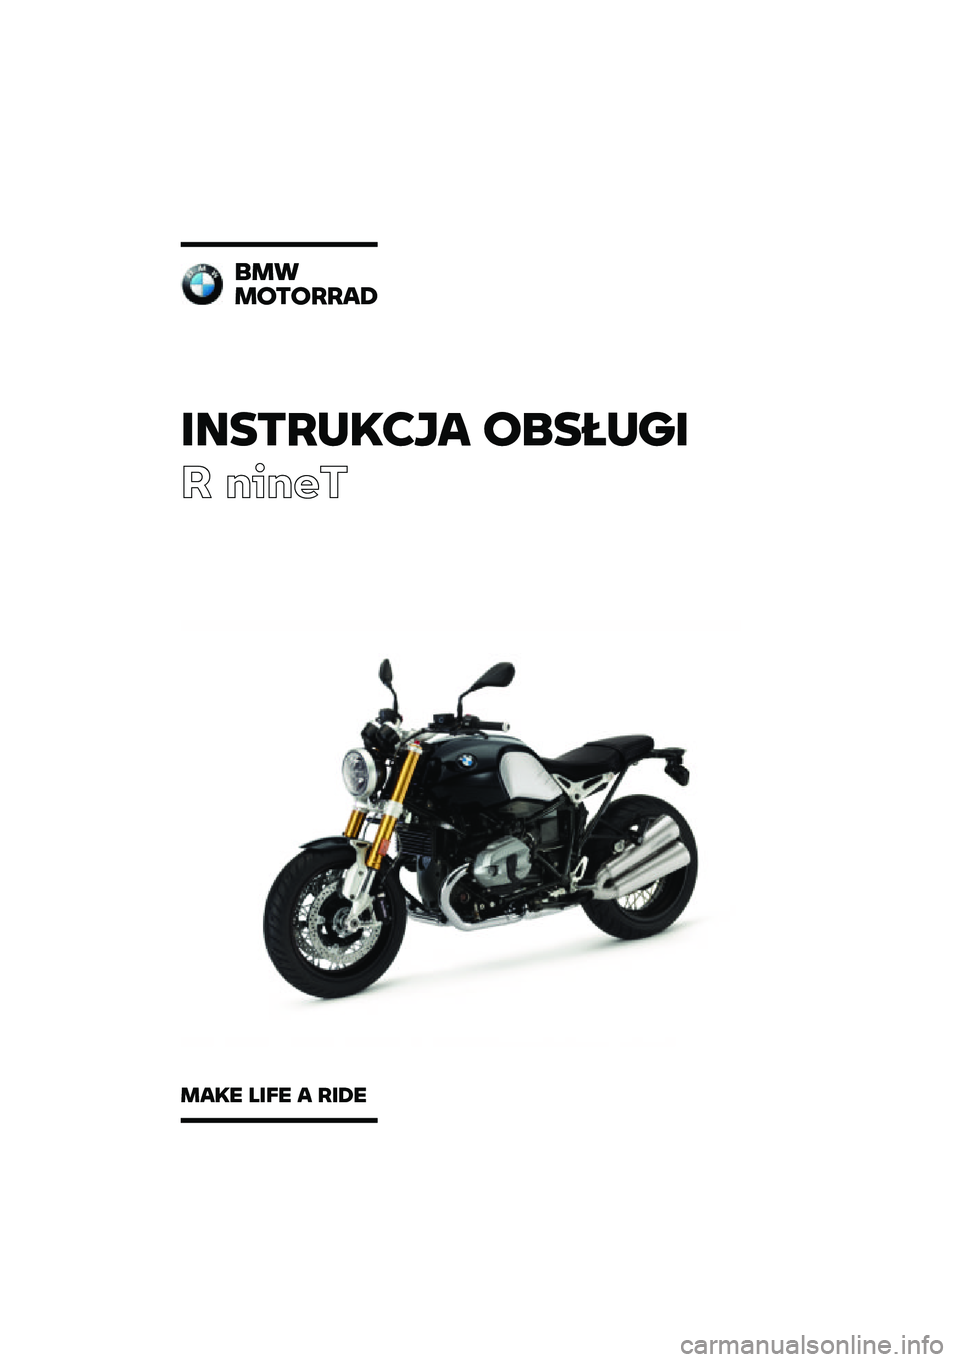 BMW MOTORRAD R NINE T 2020  Instrukcja obsługi (in Polish) �������\b�	�
� �\f�
�����
� �����
�
��
��\f��\f����
���\b� ���� � ���� 